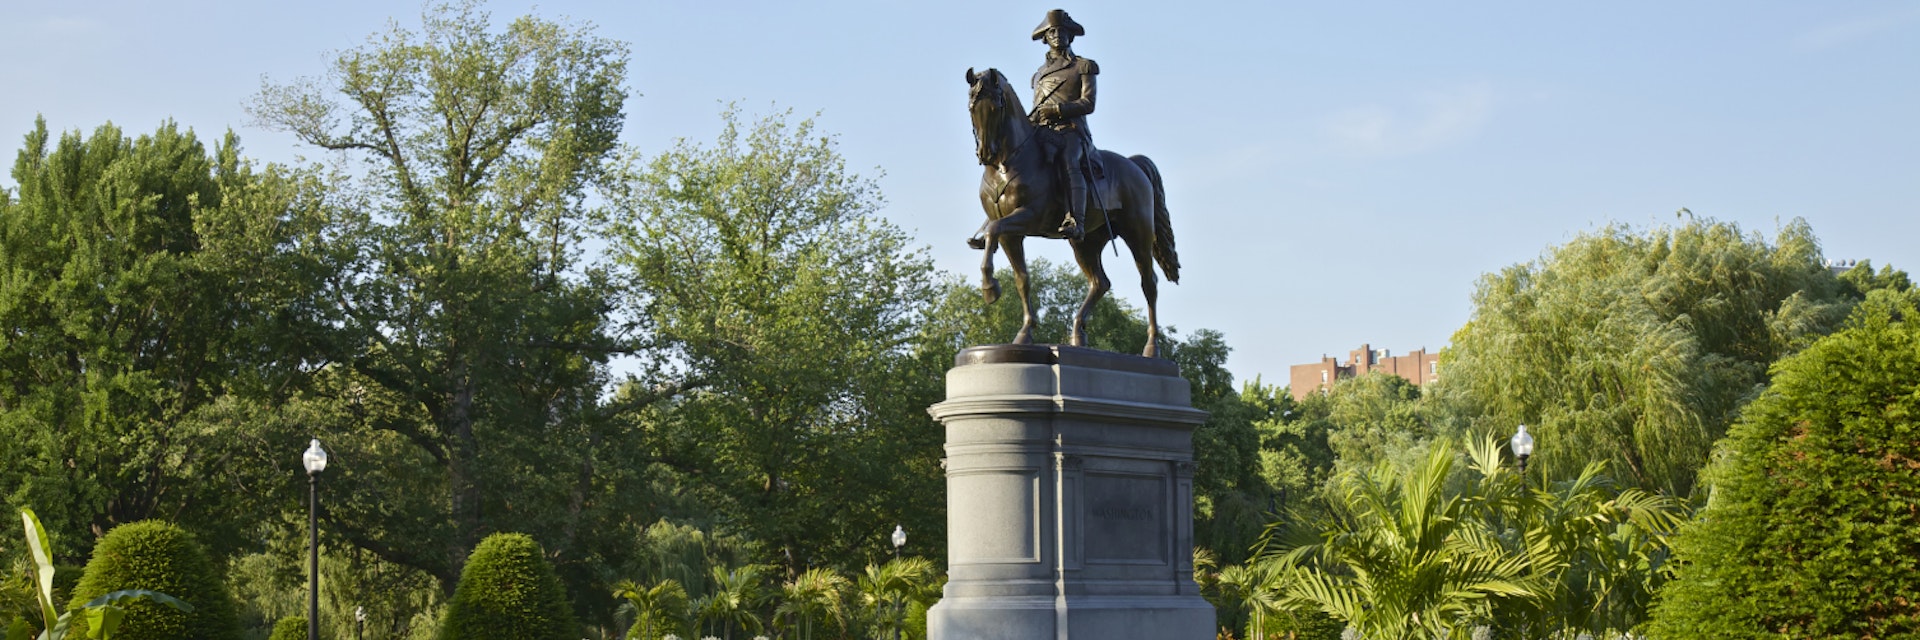 500px Photo ID: 142624811 - BOSTON - JUNE 06: George Washington riding a horse Statue in Boston Commons Public Garden in Central Boston, Massachusetts, USA. Photo taken on June 30, 2014 in Boston, Massachusetts, USA.